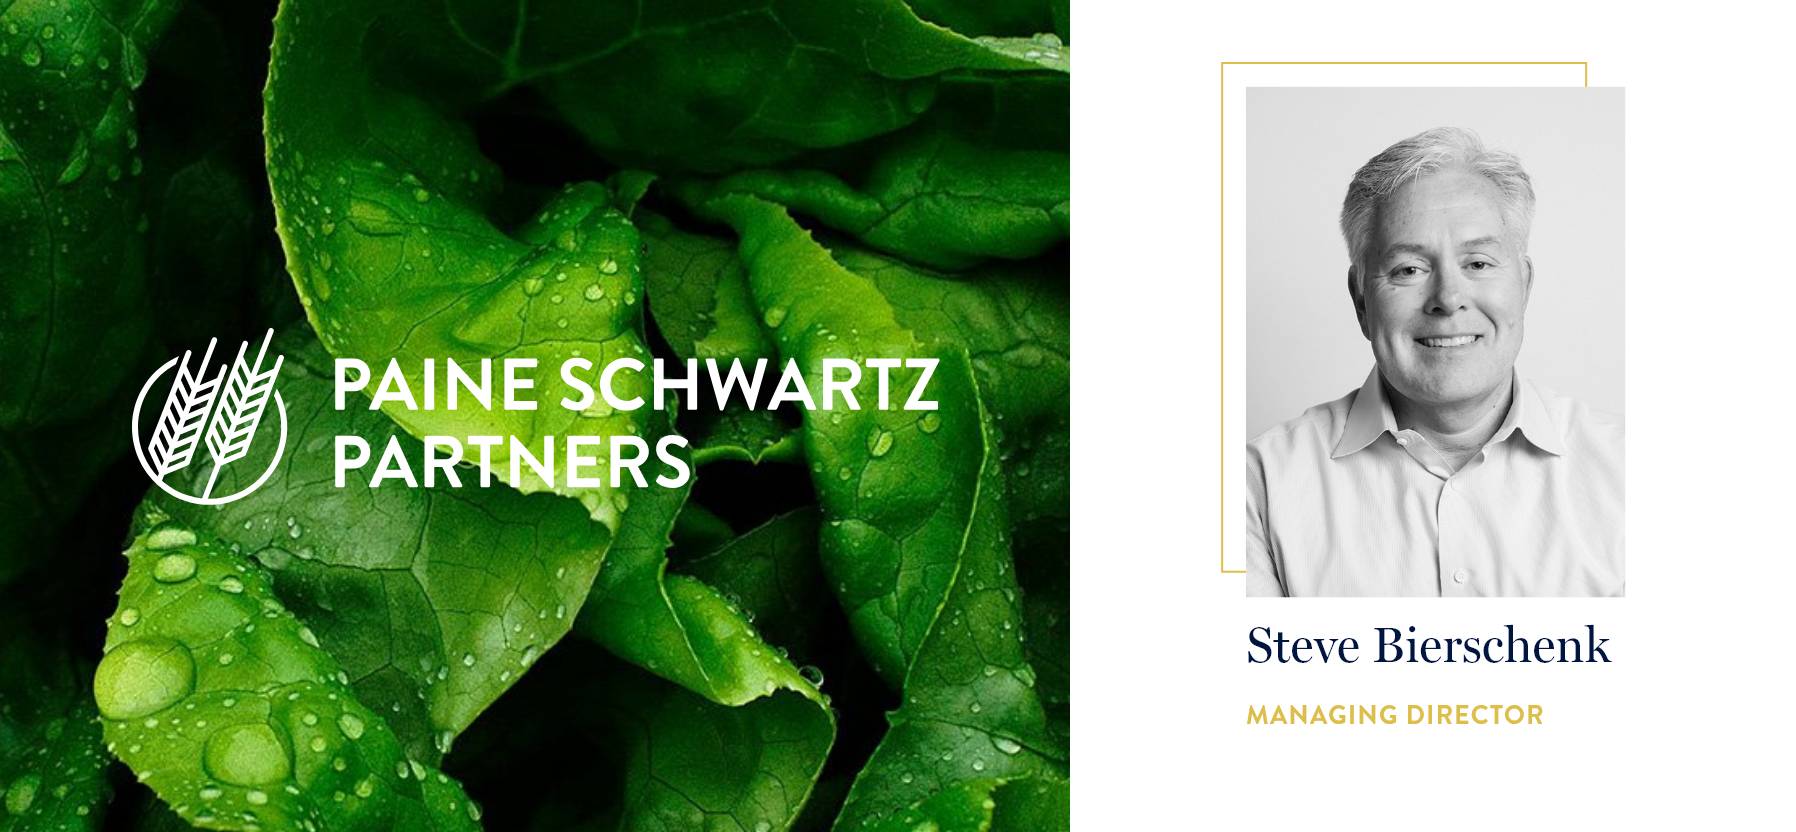 Paine Schwartz Partners Adds Steve Bierschenk as a Managing Director@2x